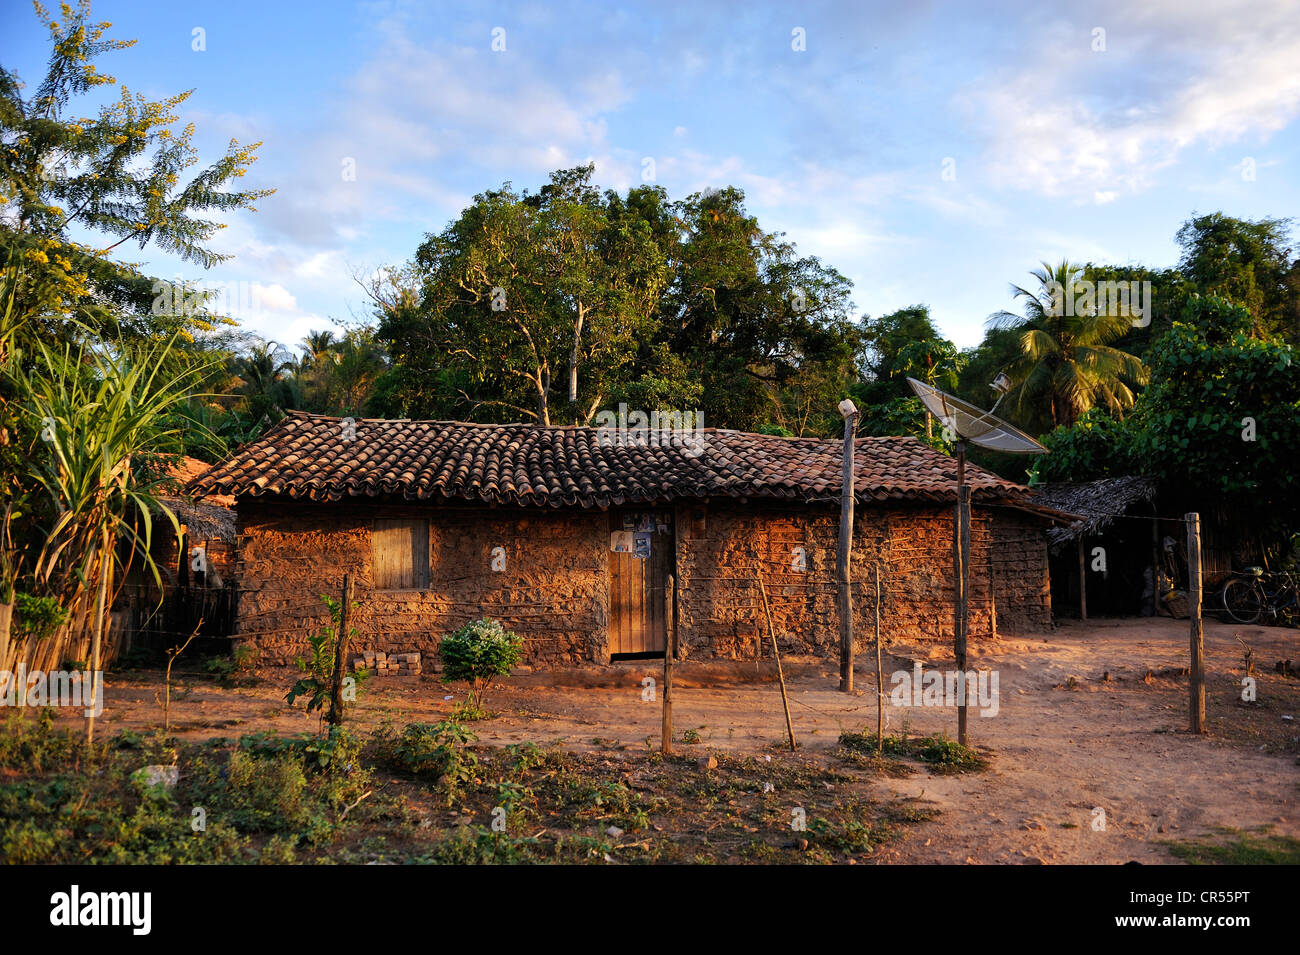 Traditionelles Haus aus Schlamm, Amazonas Regenwald, Maranhao, Brasilien, Südamerika, Lateinamerika Stockfoto